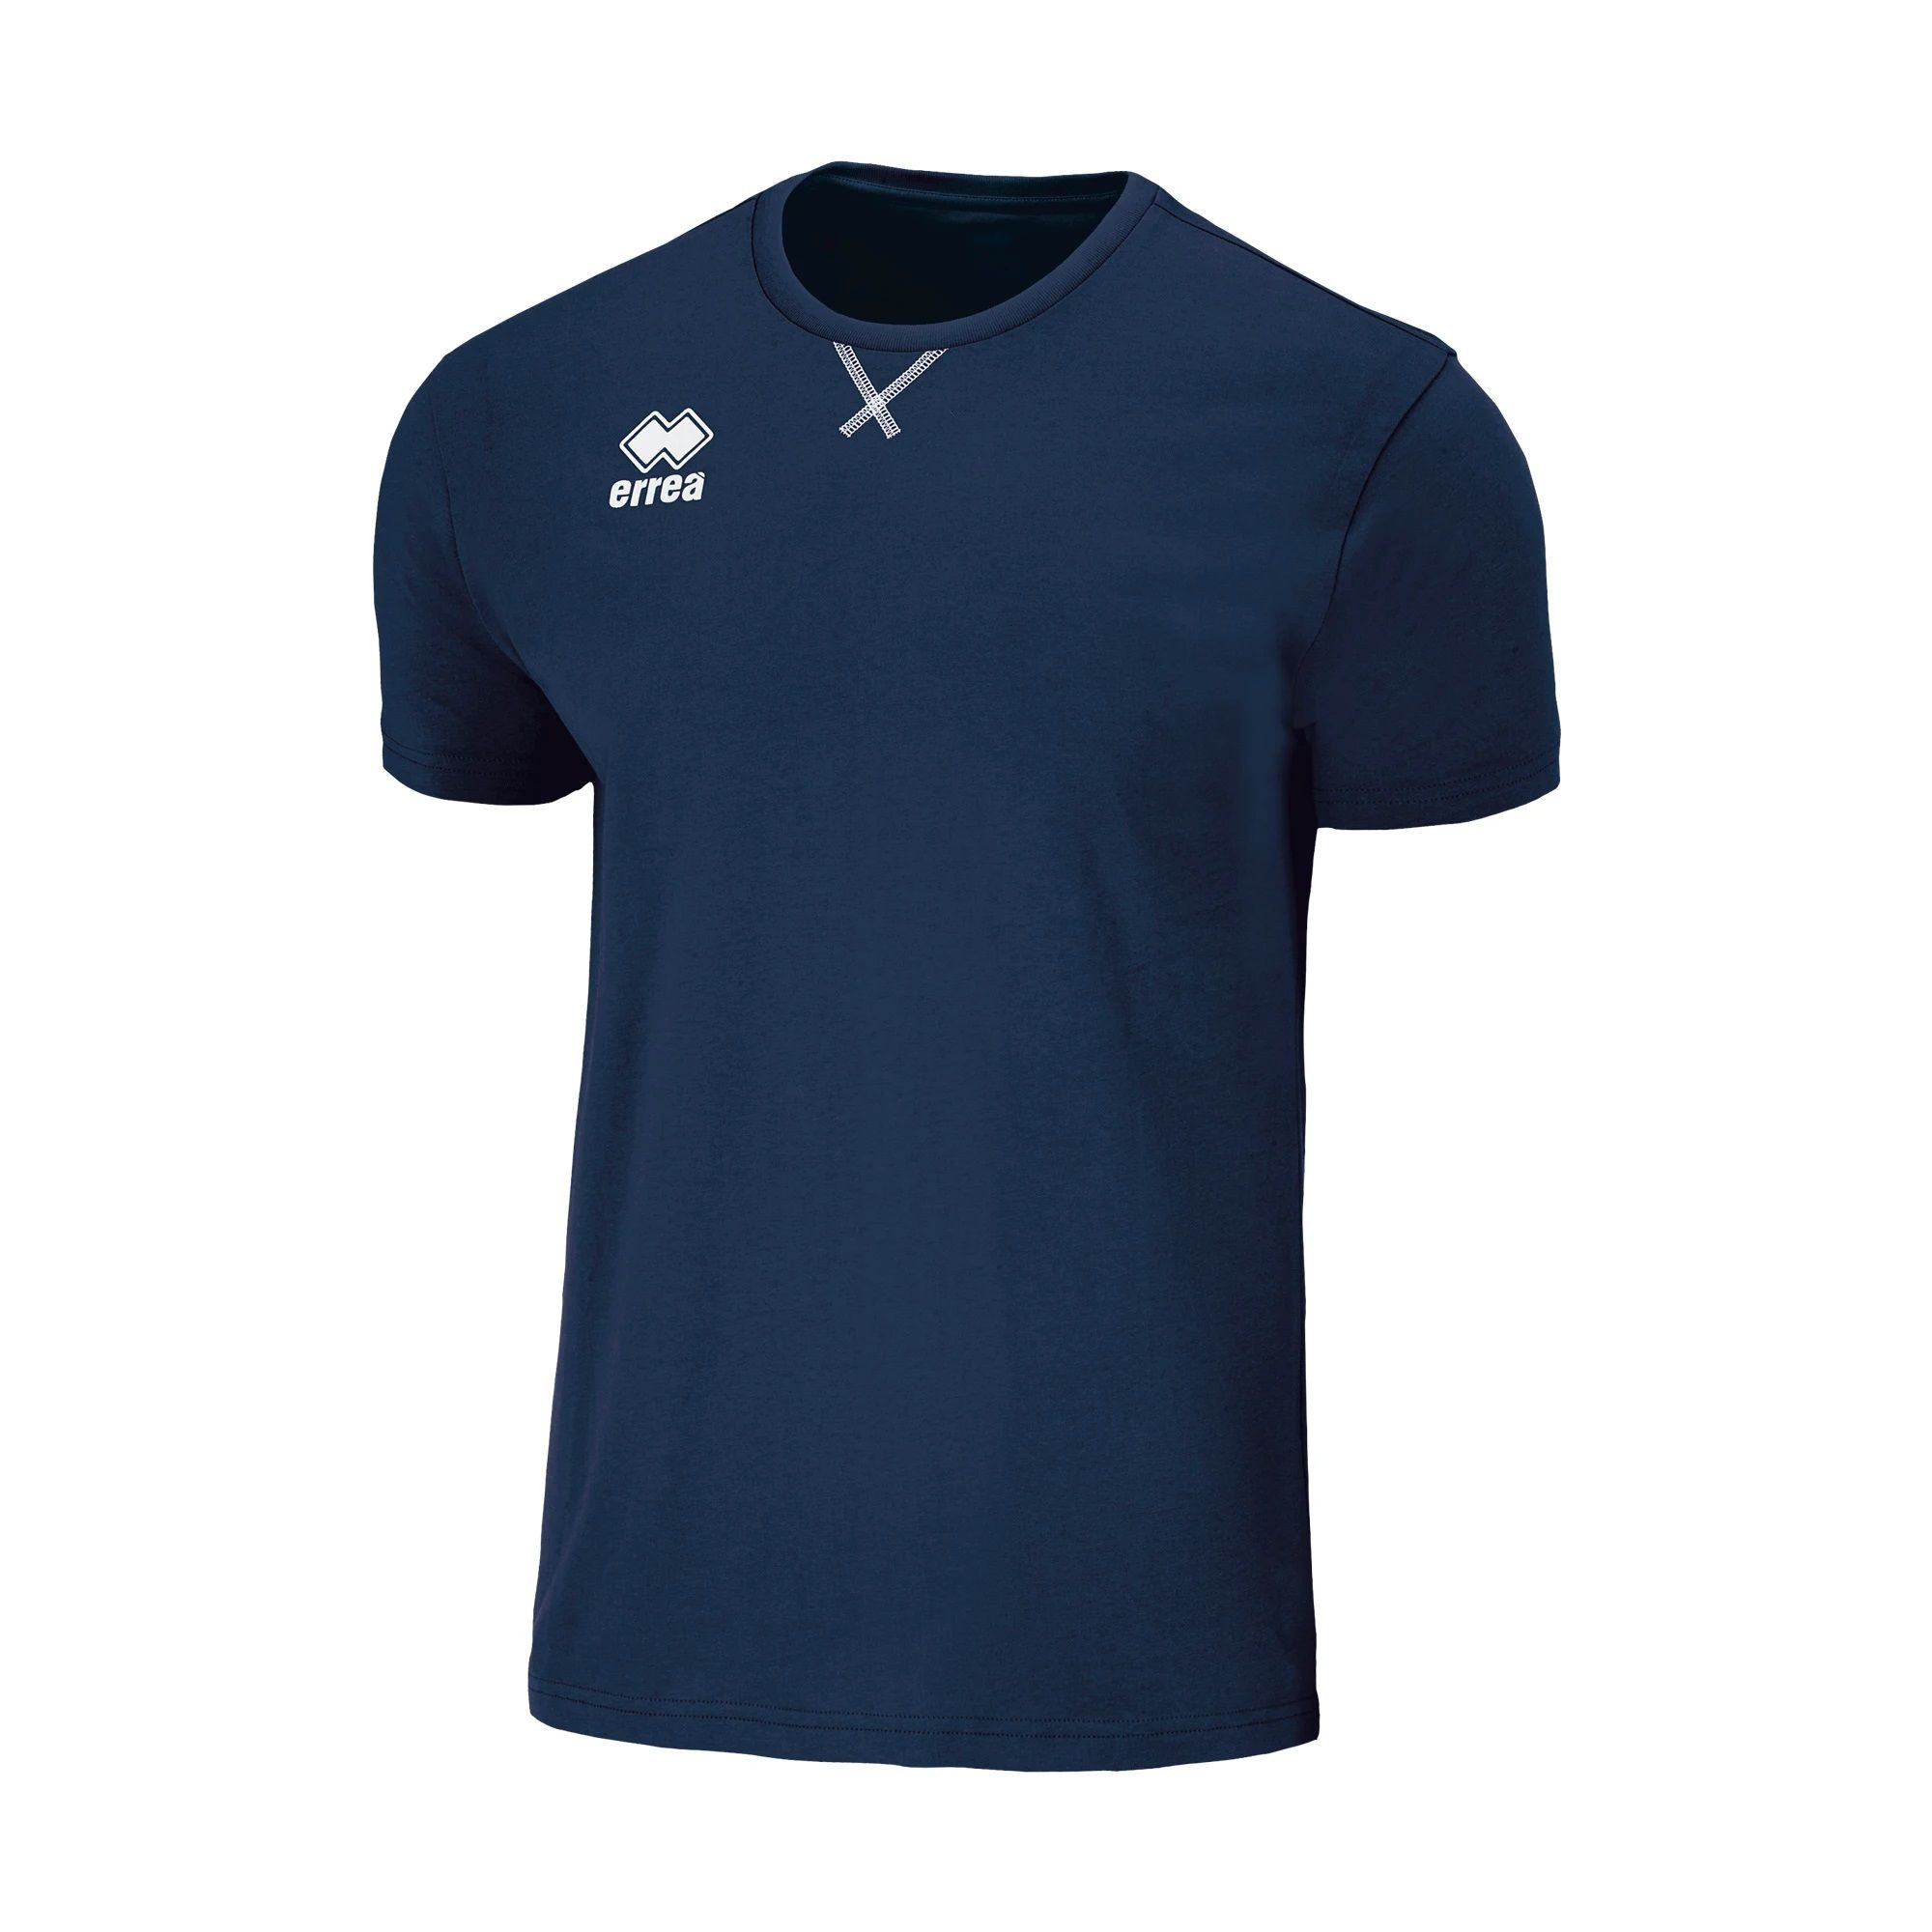 Tee Shirt à manches courtes Professional 3.0 - Bleu marine